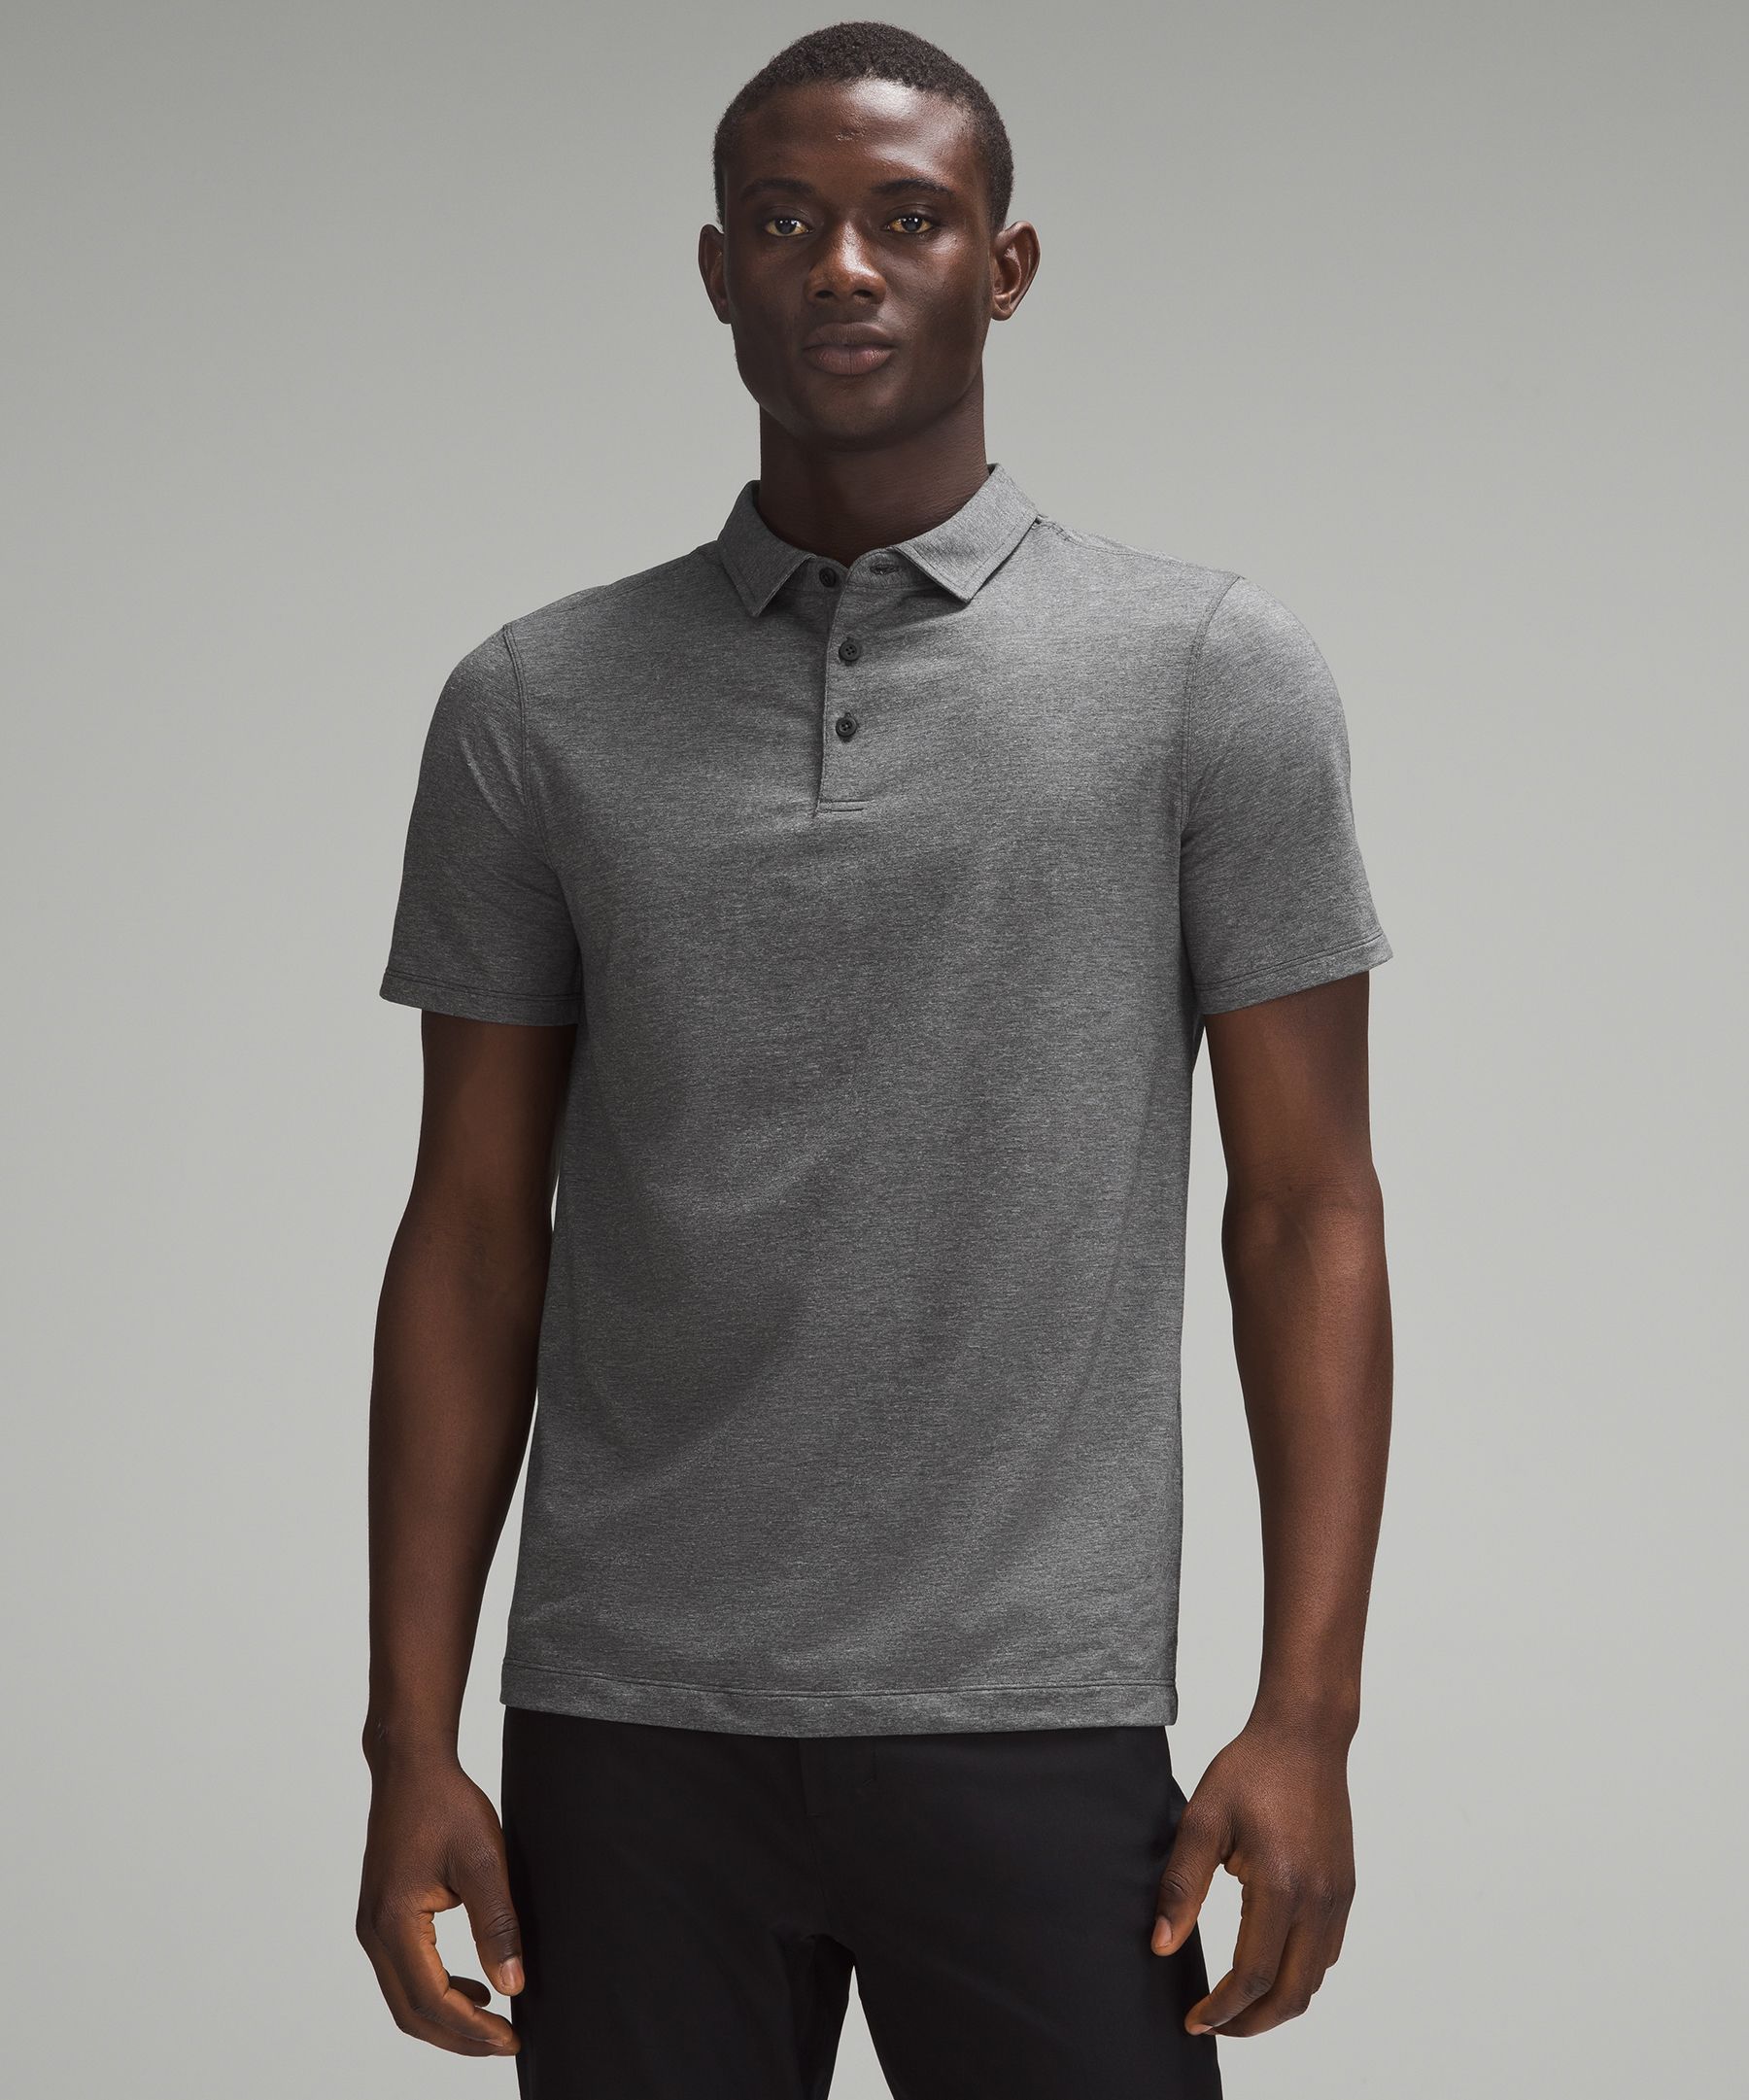 Evolution Short-Sleeve Polo Shirt, Men's Short Sleeve Shirts & Tee's